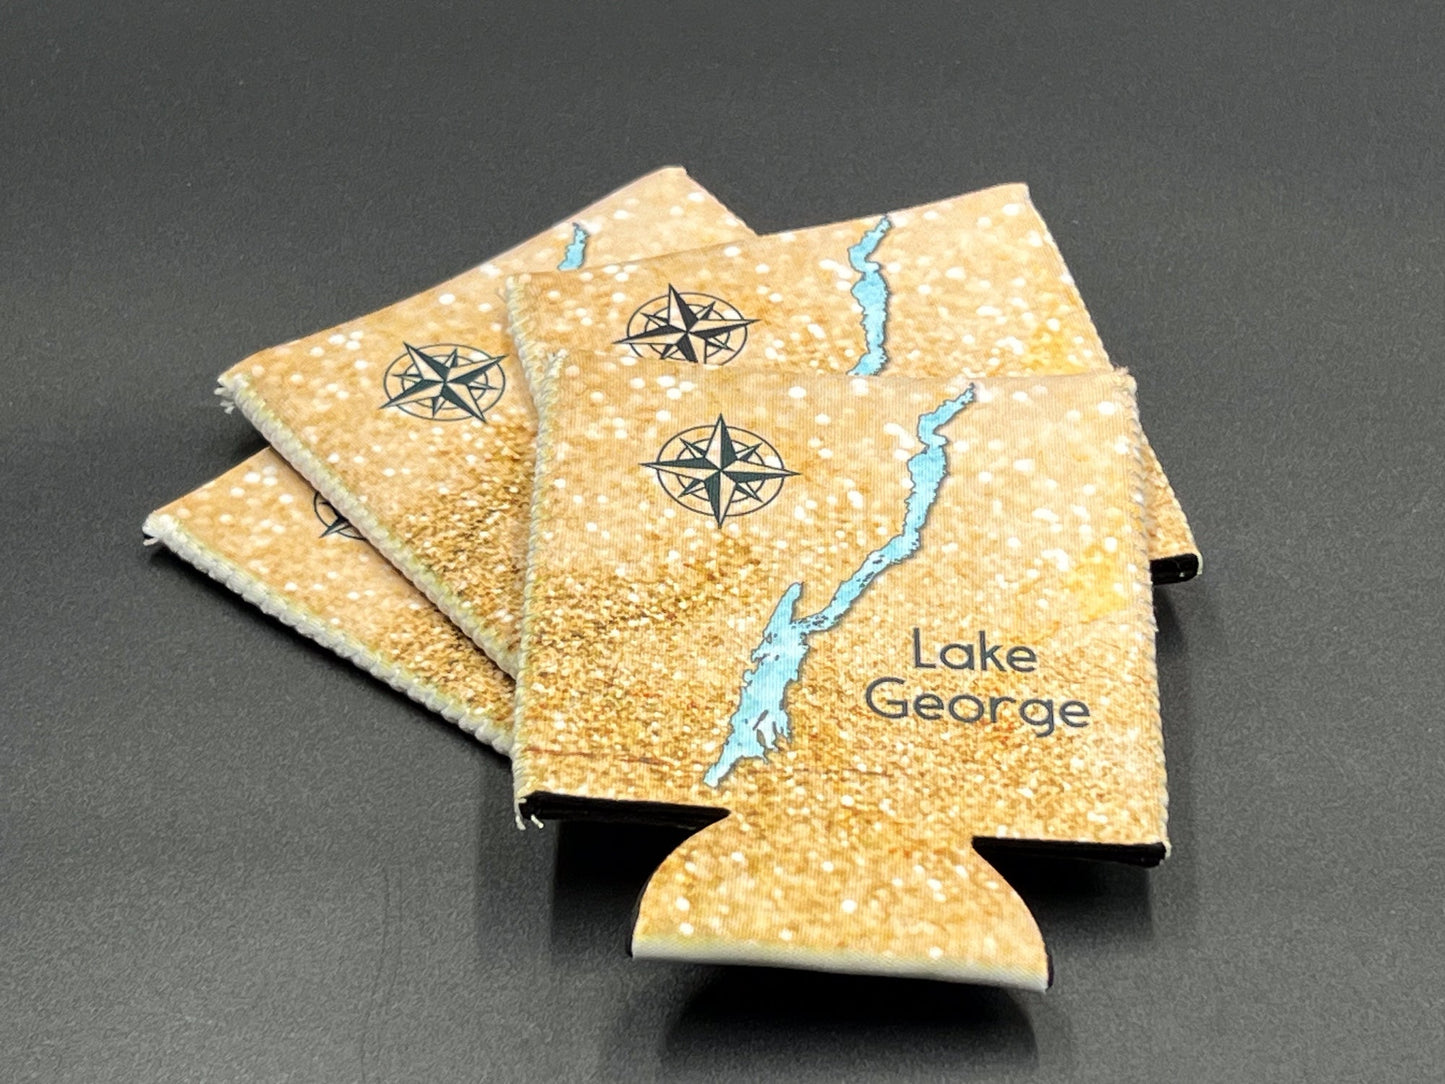 Adirondack Lake - Set of 4 Make My Lake Suncity Collection lake cozies